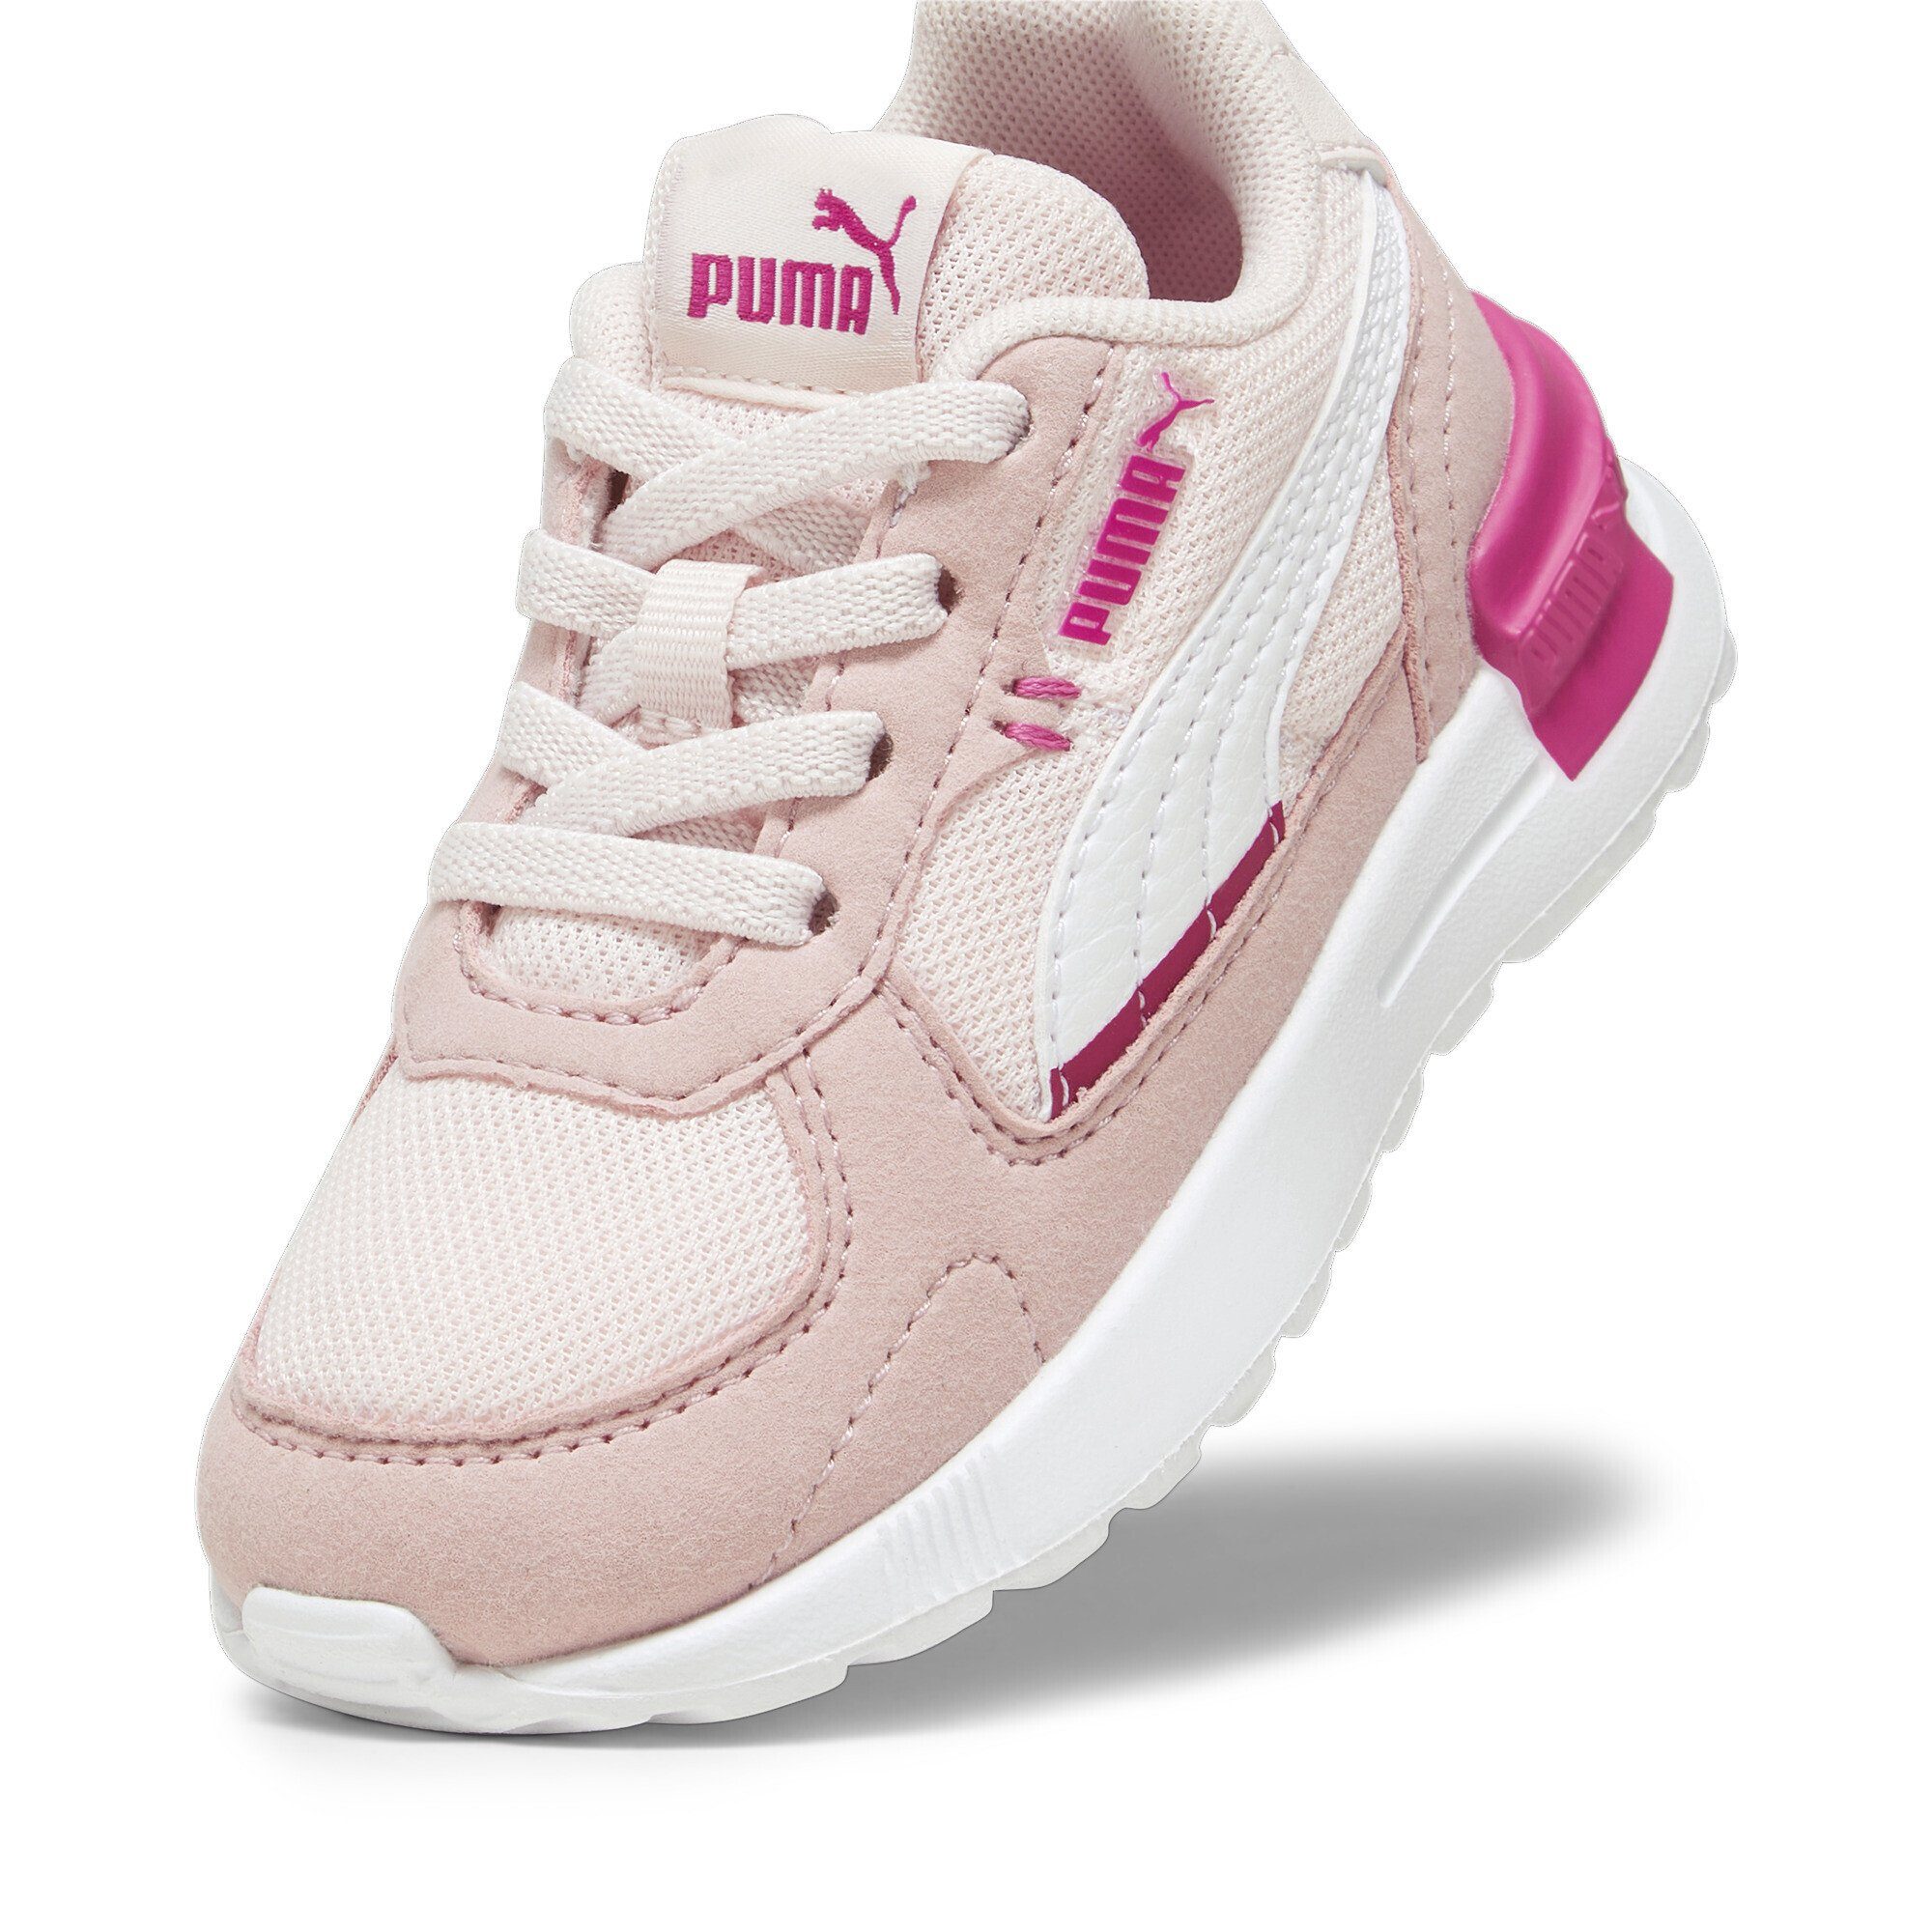 PUMA Graviton Frosty Kinder Future Pink AC White Sneakers Pinktastic Sneaker